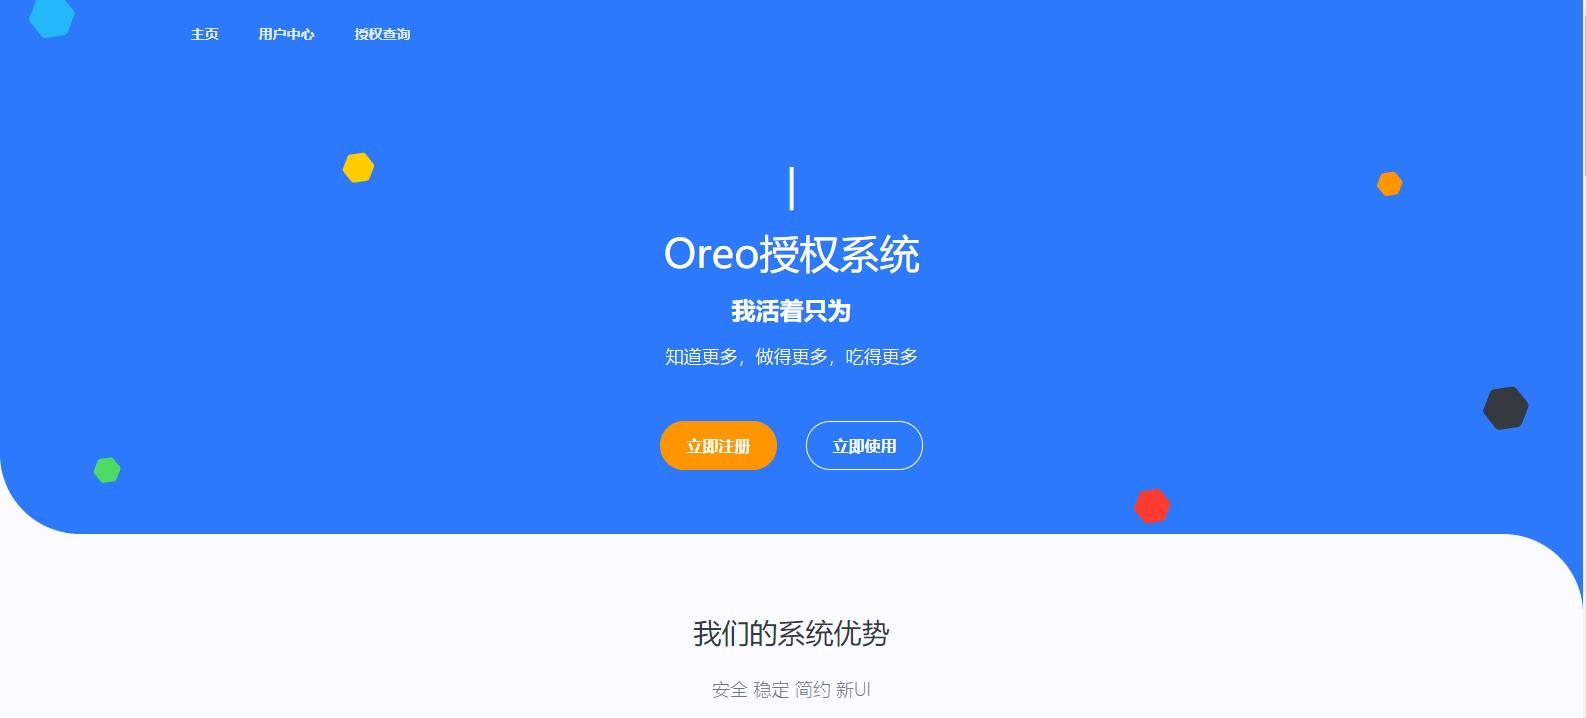 
Oreo授权系统二开版全开源，支持多程序整合应用
-安小熙博客
-第1
张图片